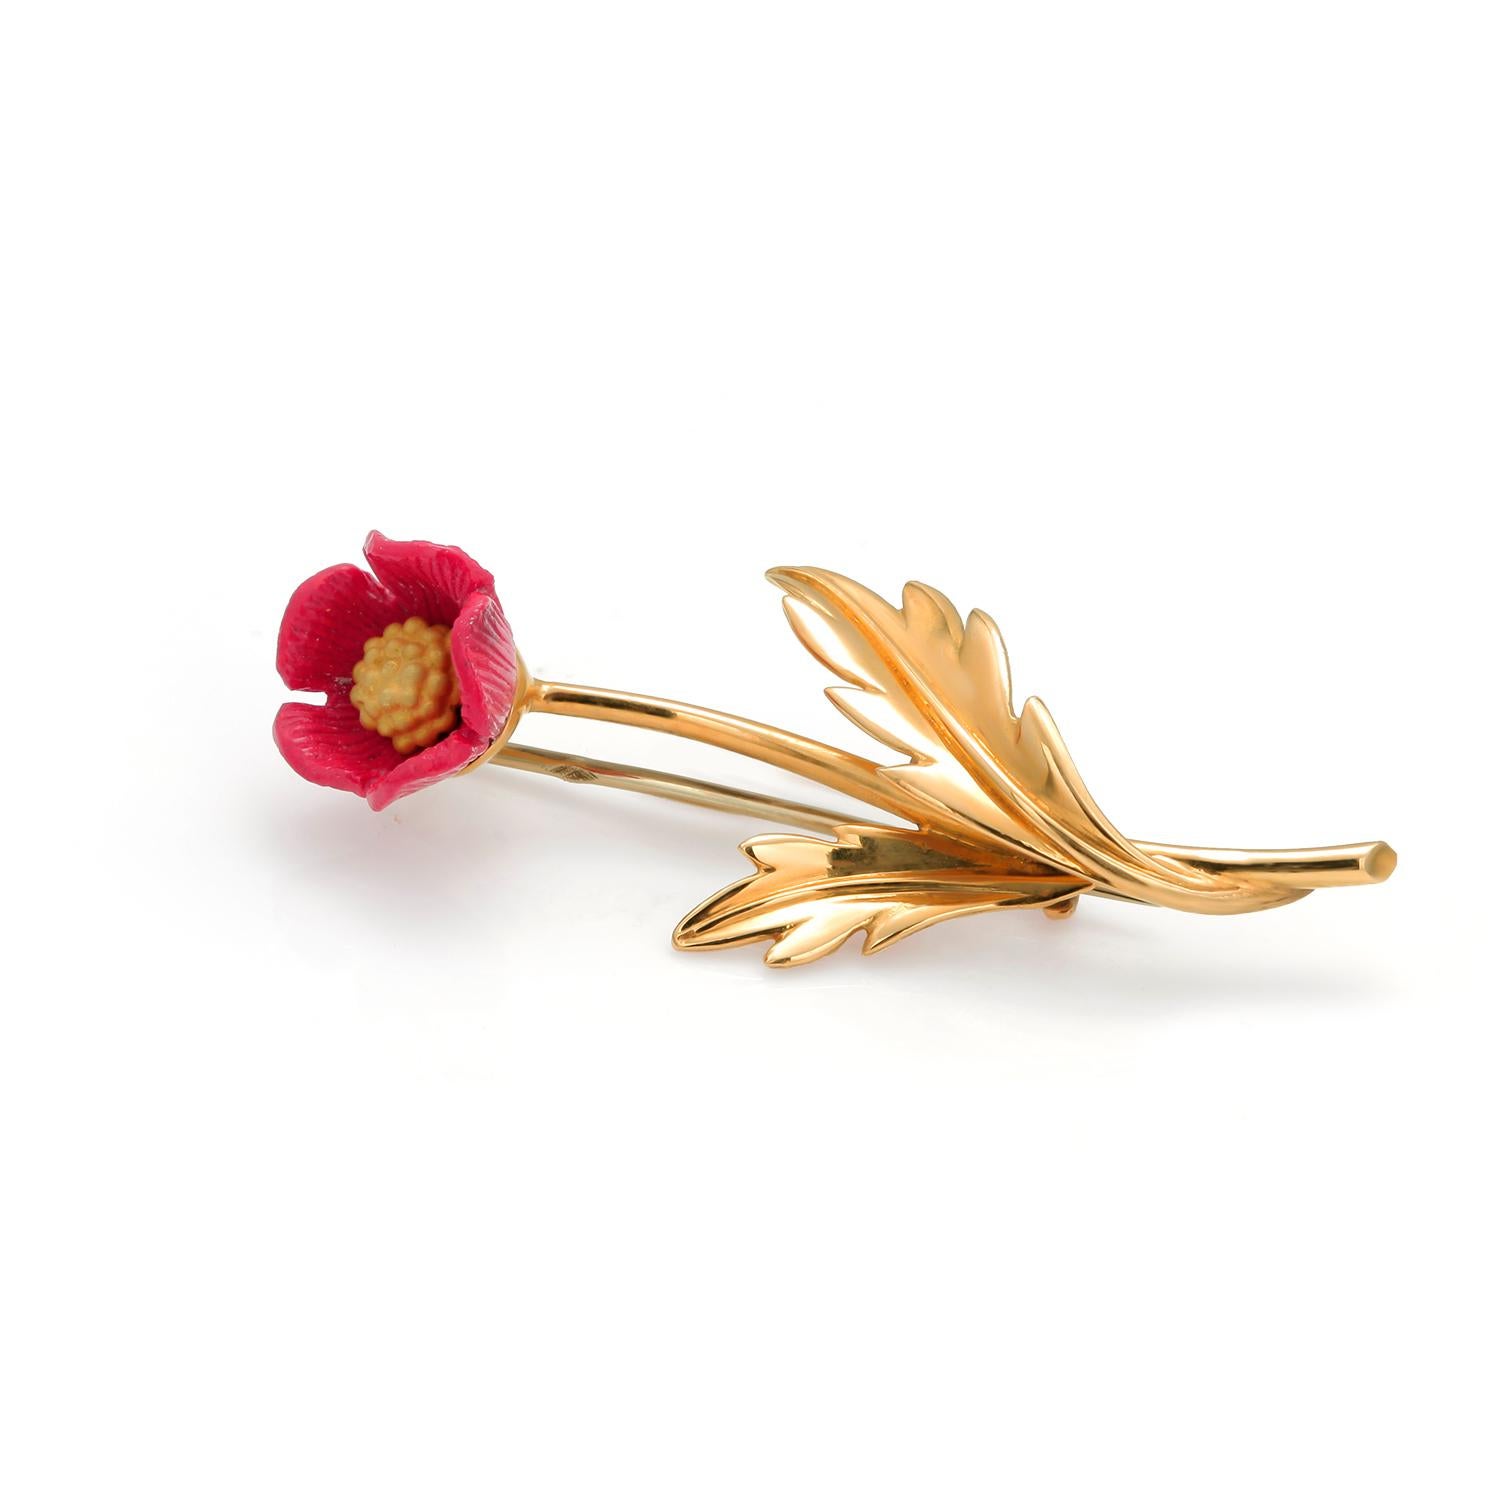 Women's or Men's Eighteen Karat Yellow Gold Pin with Red Poppy